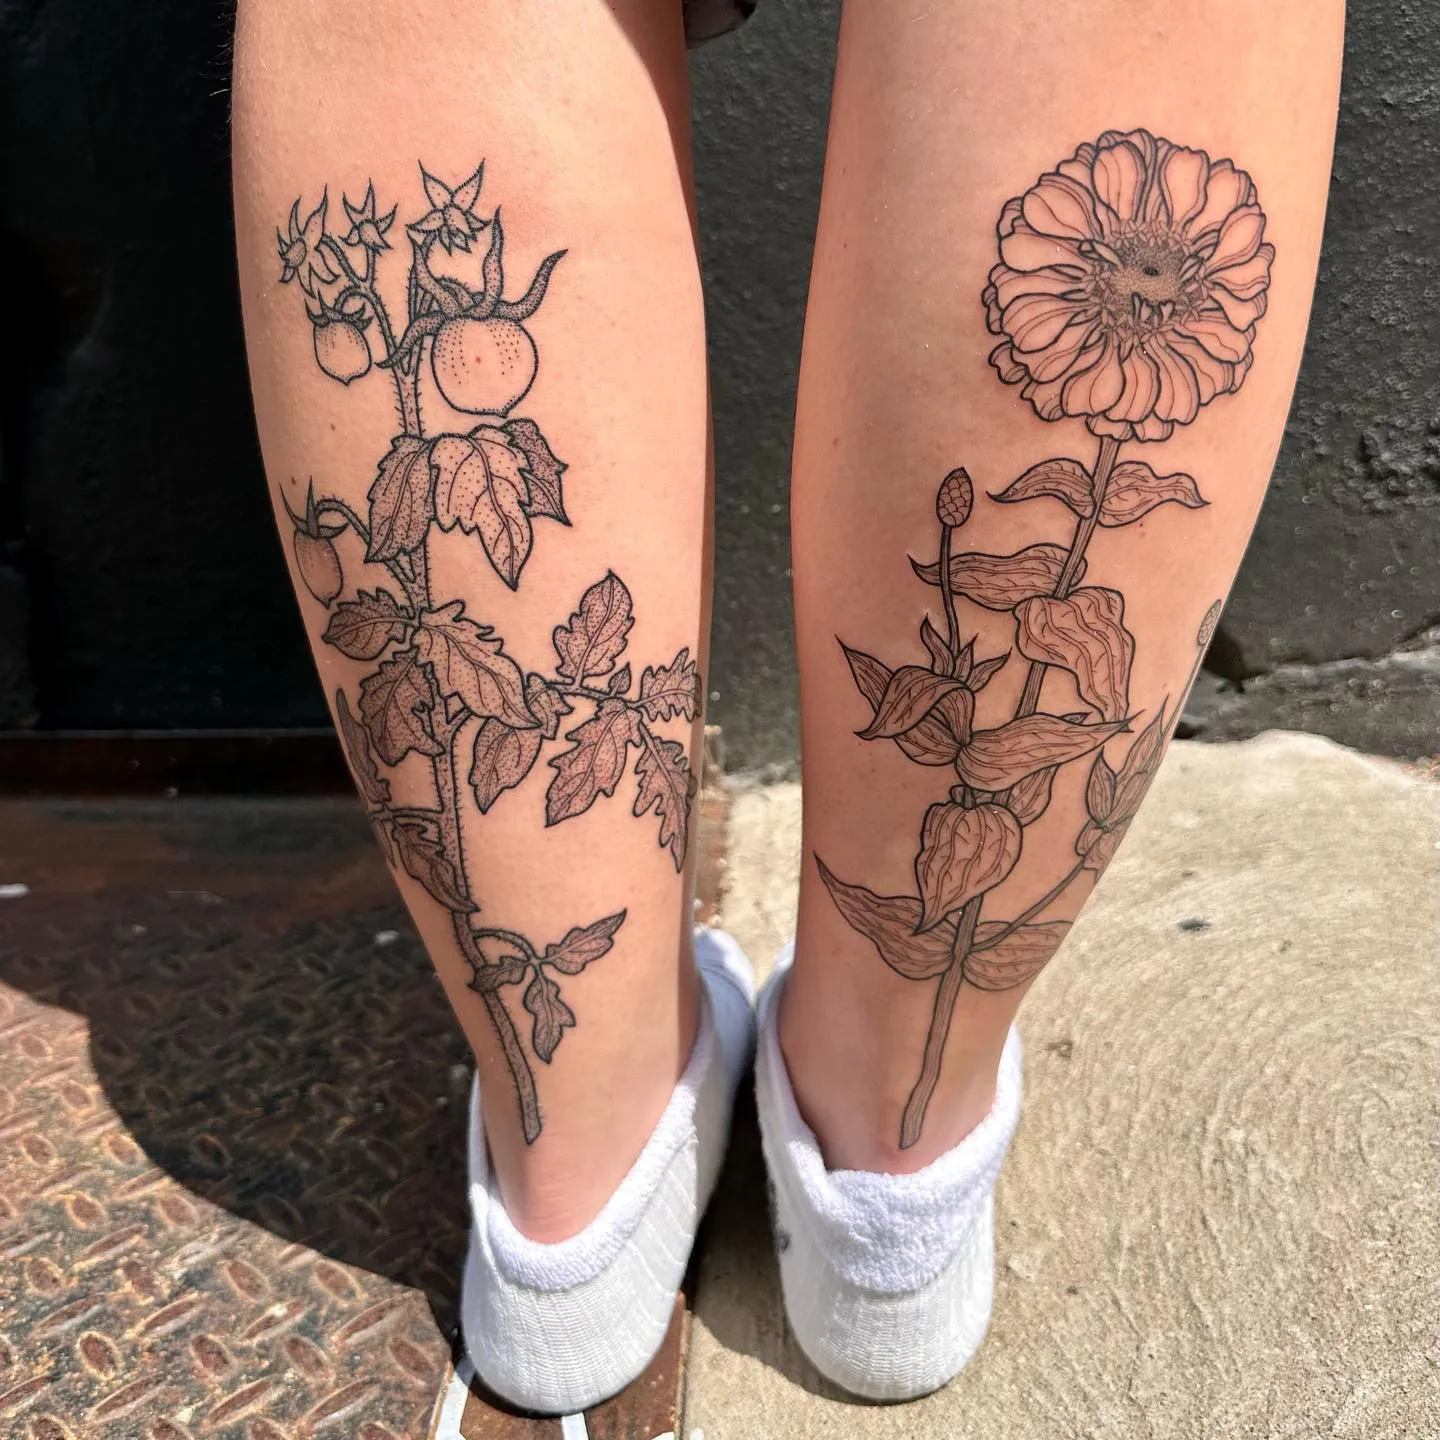 Intricate Zinnia Tattoo Embracing the Legs